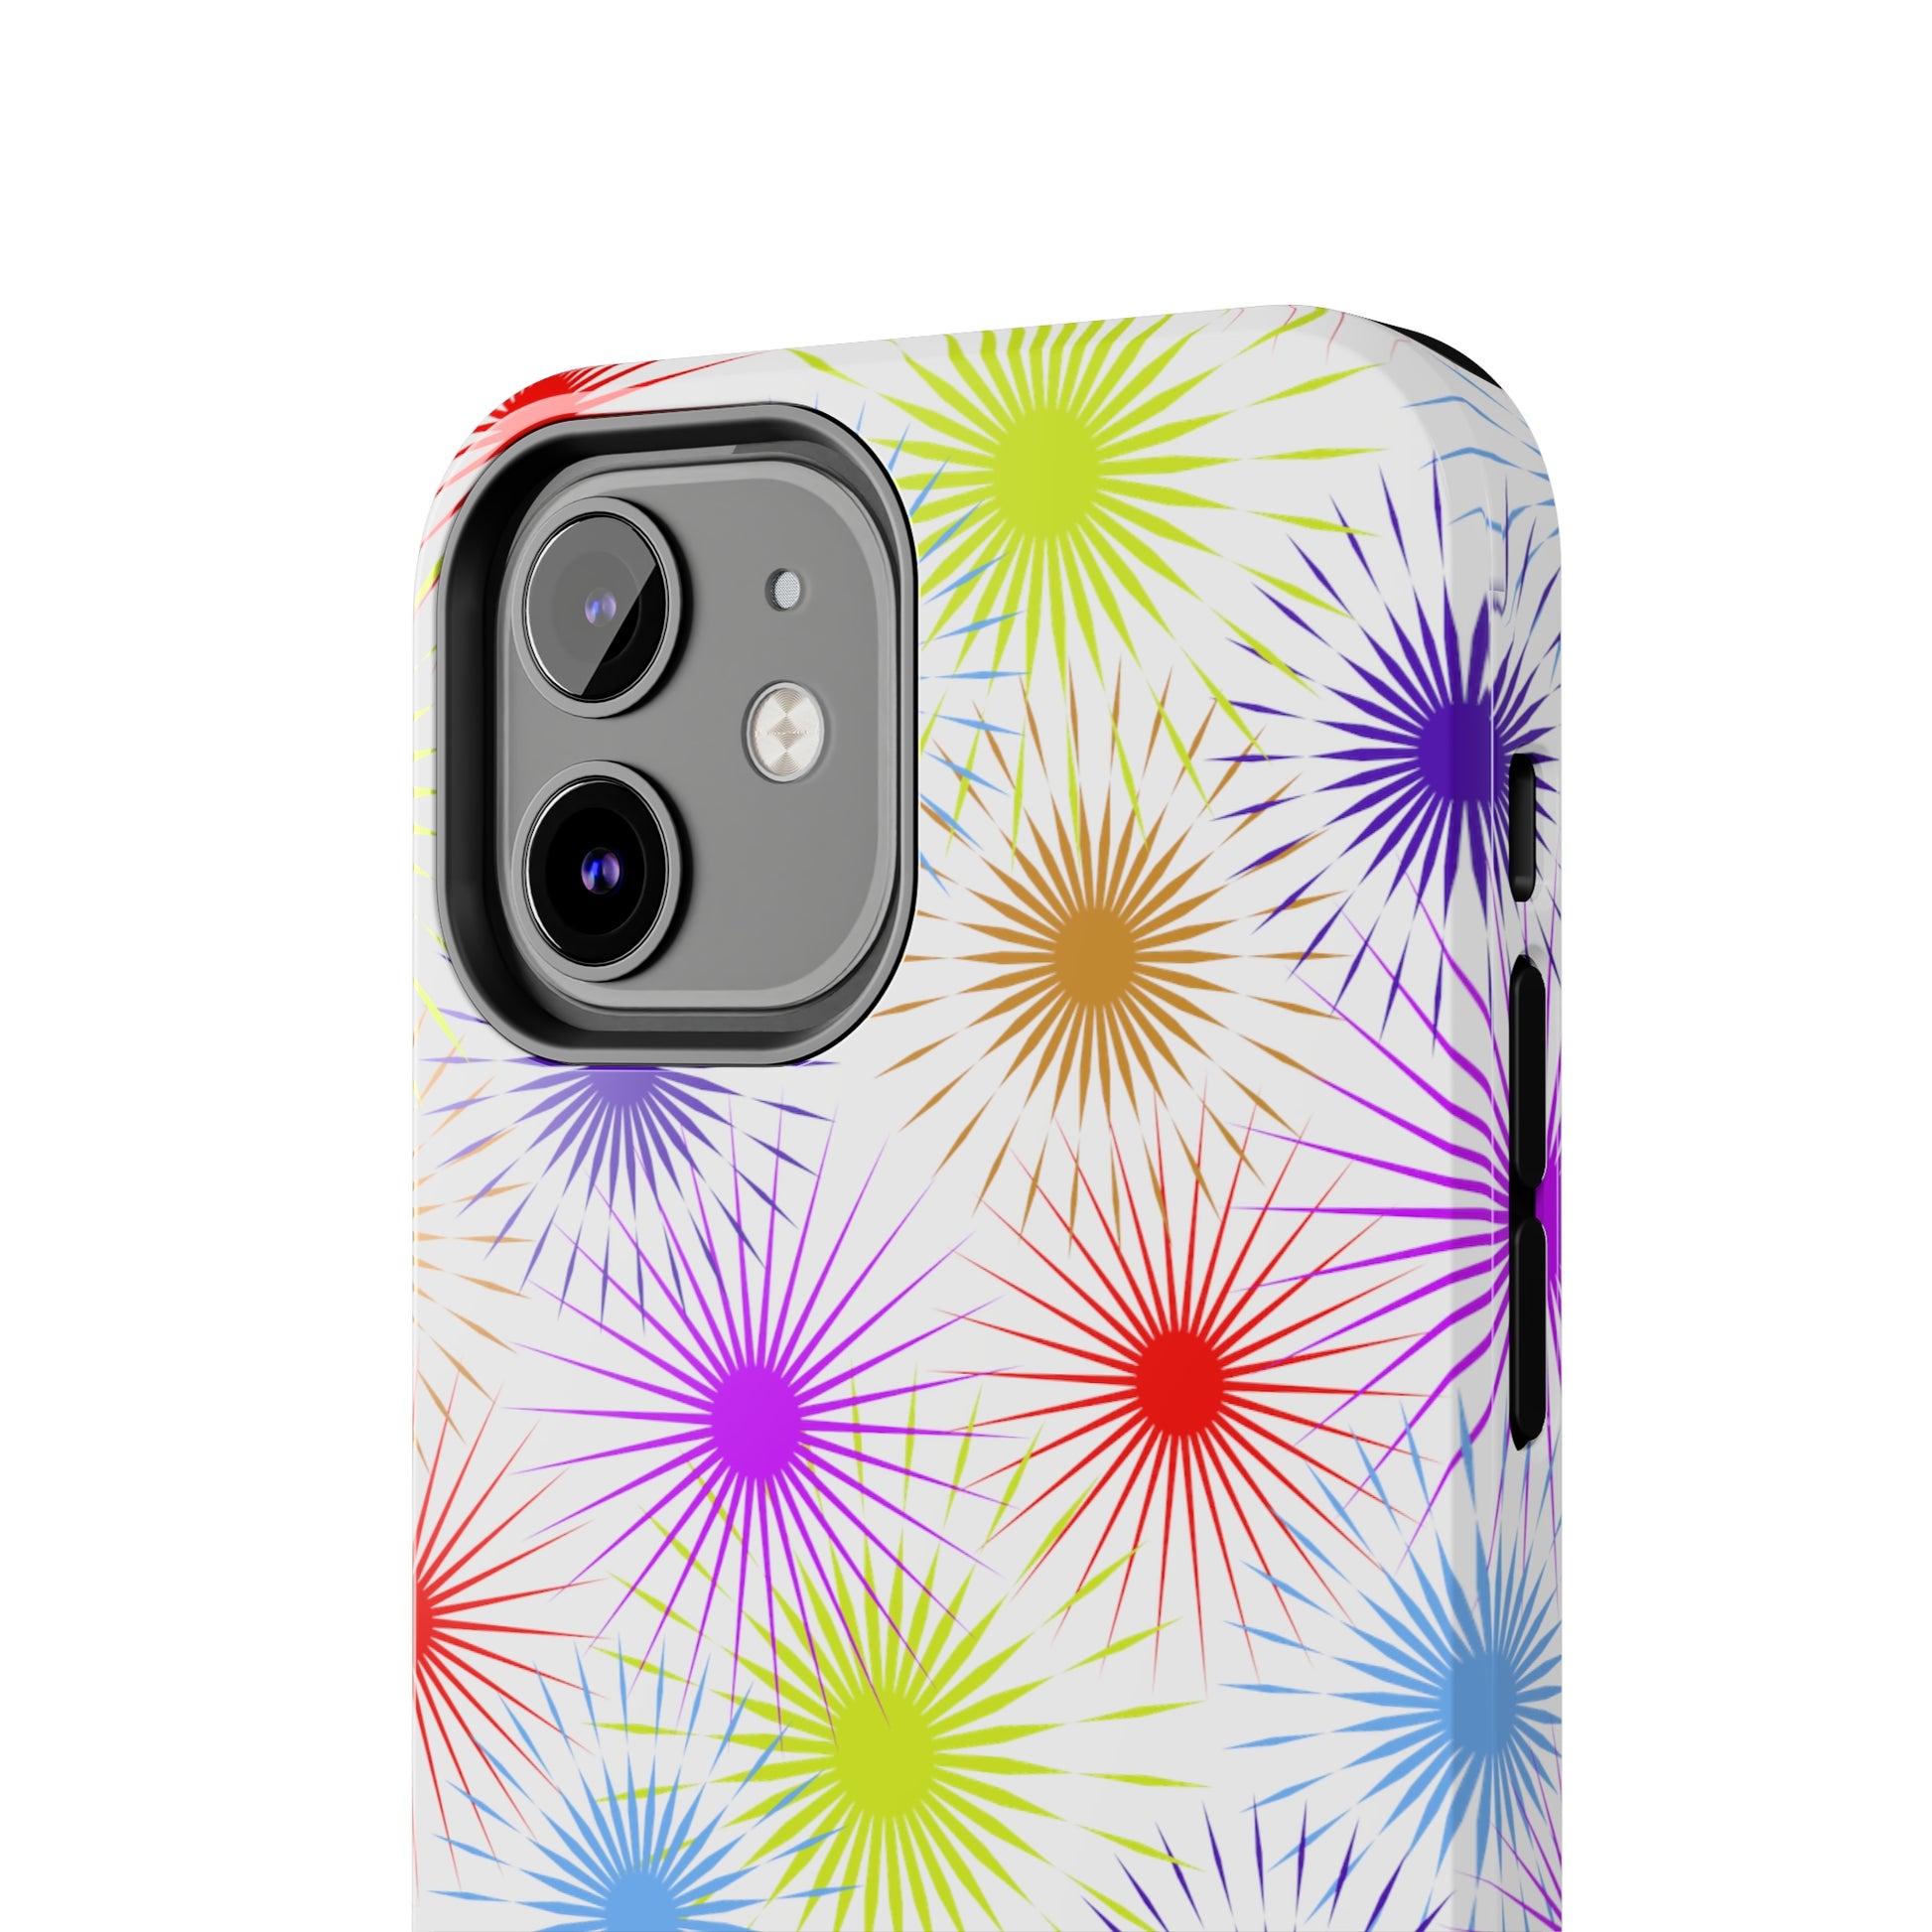 Glitter Bomb: iPhone - Tough iPhone Case Design - Wireless Charging - Superior Protection - Original Designs by TheGlassyLass.com